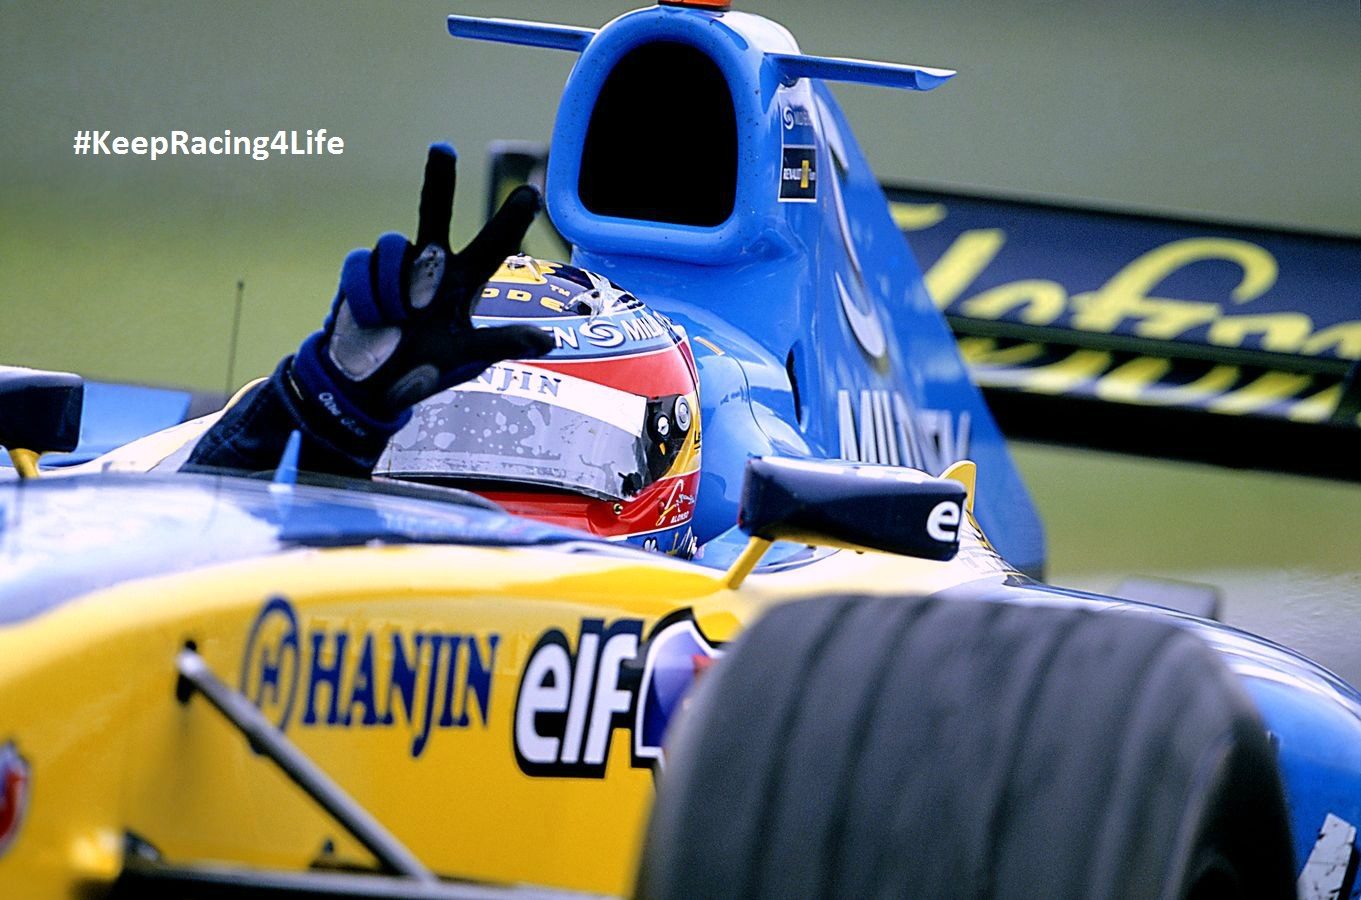 Fernando Alonso Wins The 2005 San Marino GP (2)